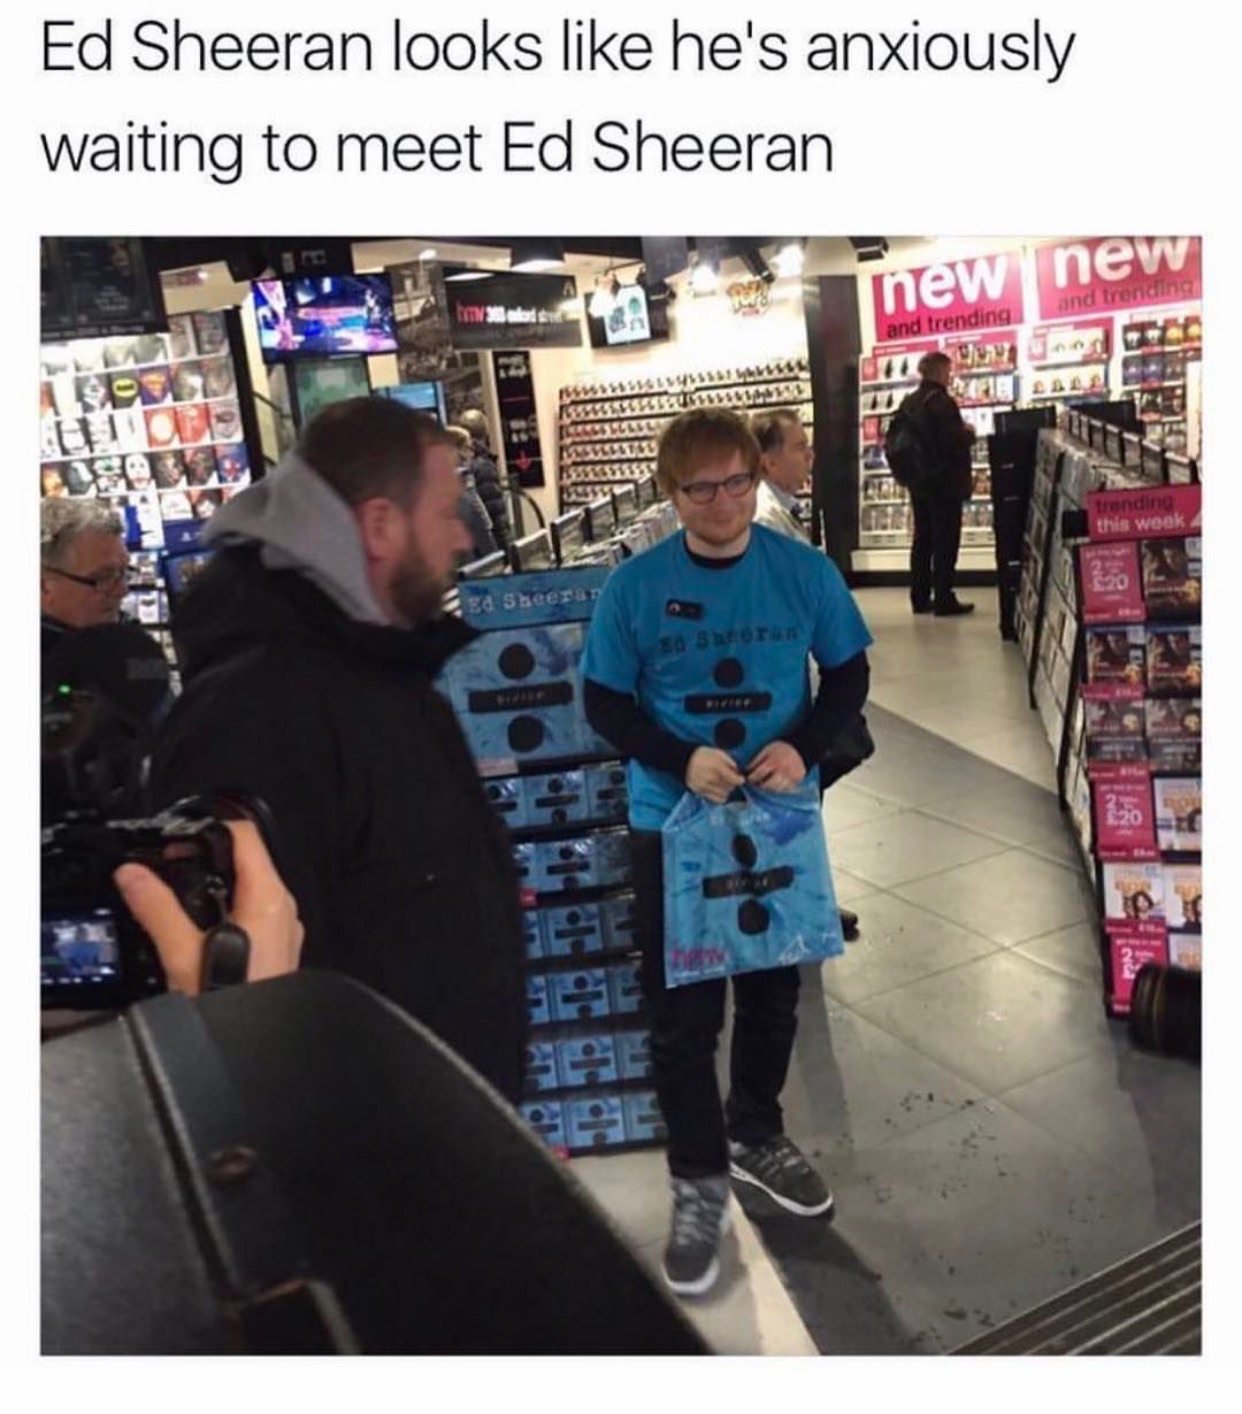 ed sheeran looks like an ed sheeran fan - Ed Sheeran looks he's anxiously waiting to meet Ed Sheeran new new and trending and trending Lysis Mw 19 161 trending this week > Ed Sheeran